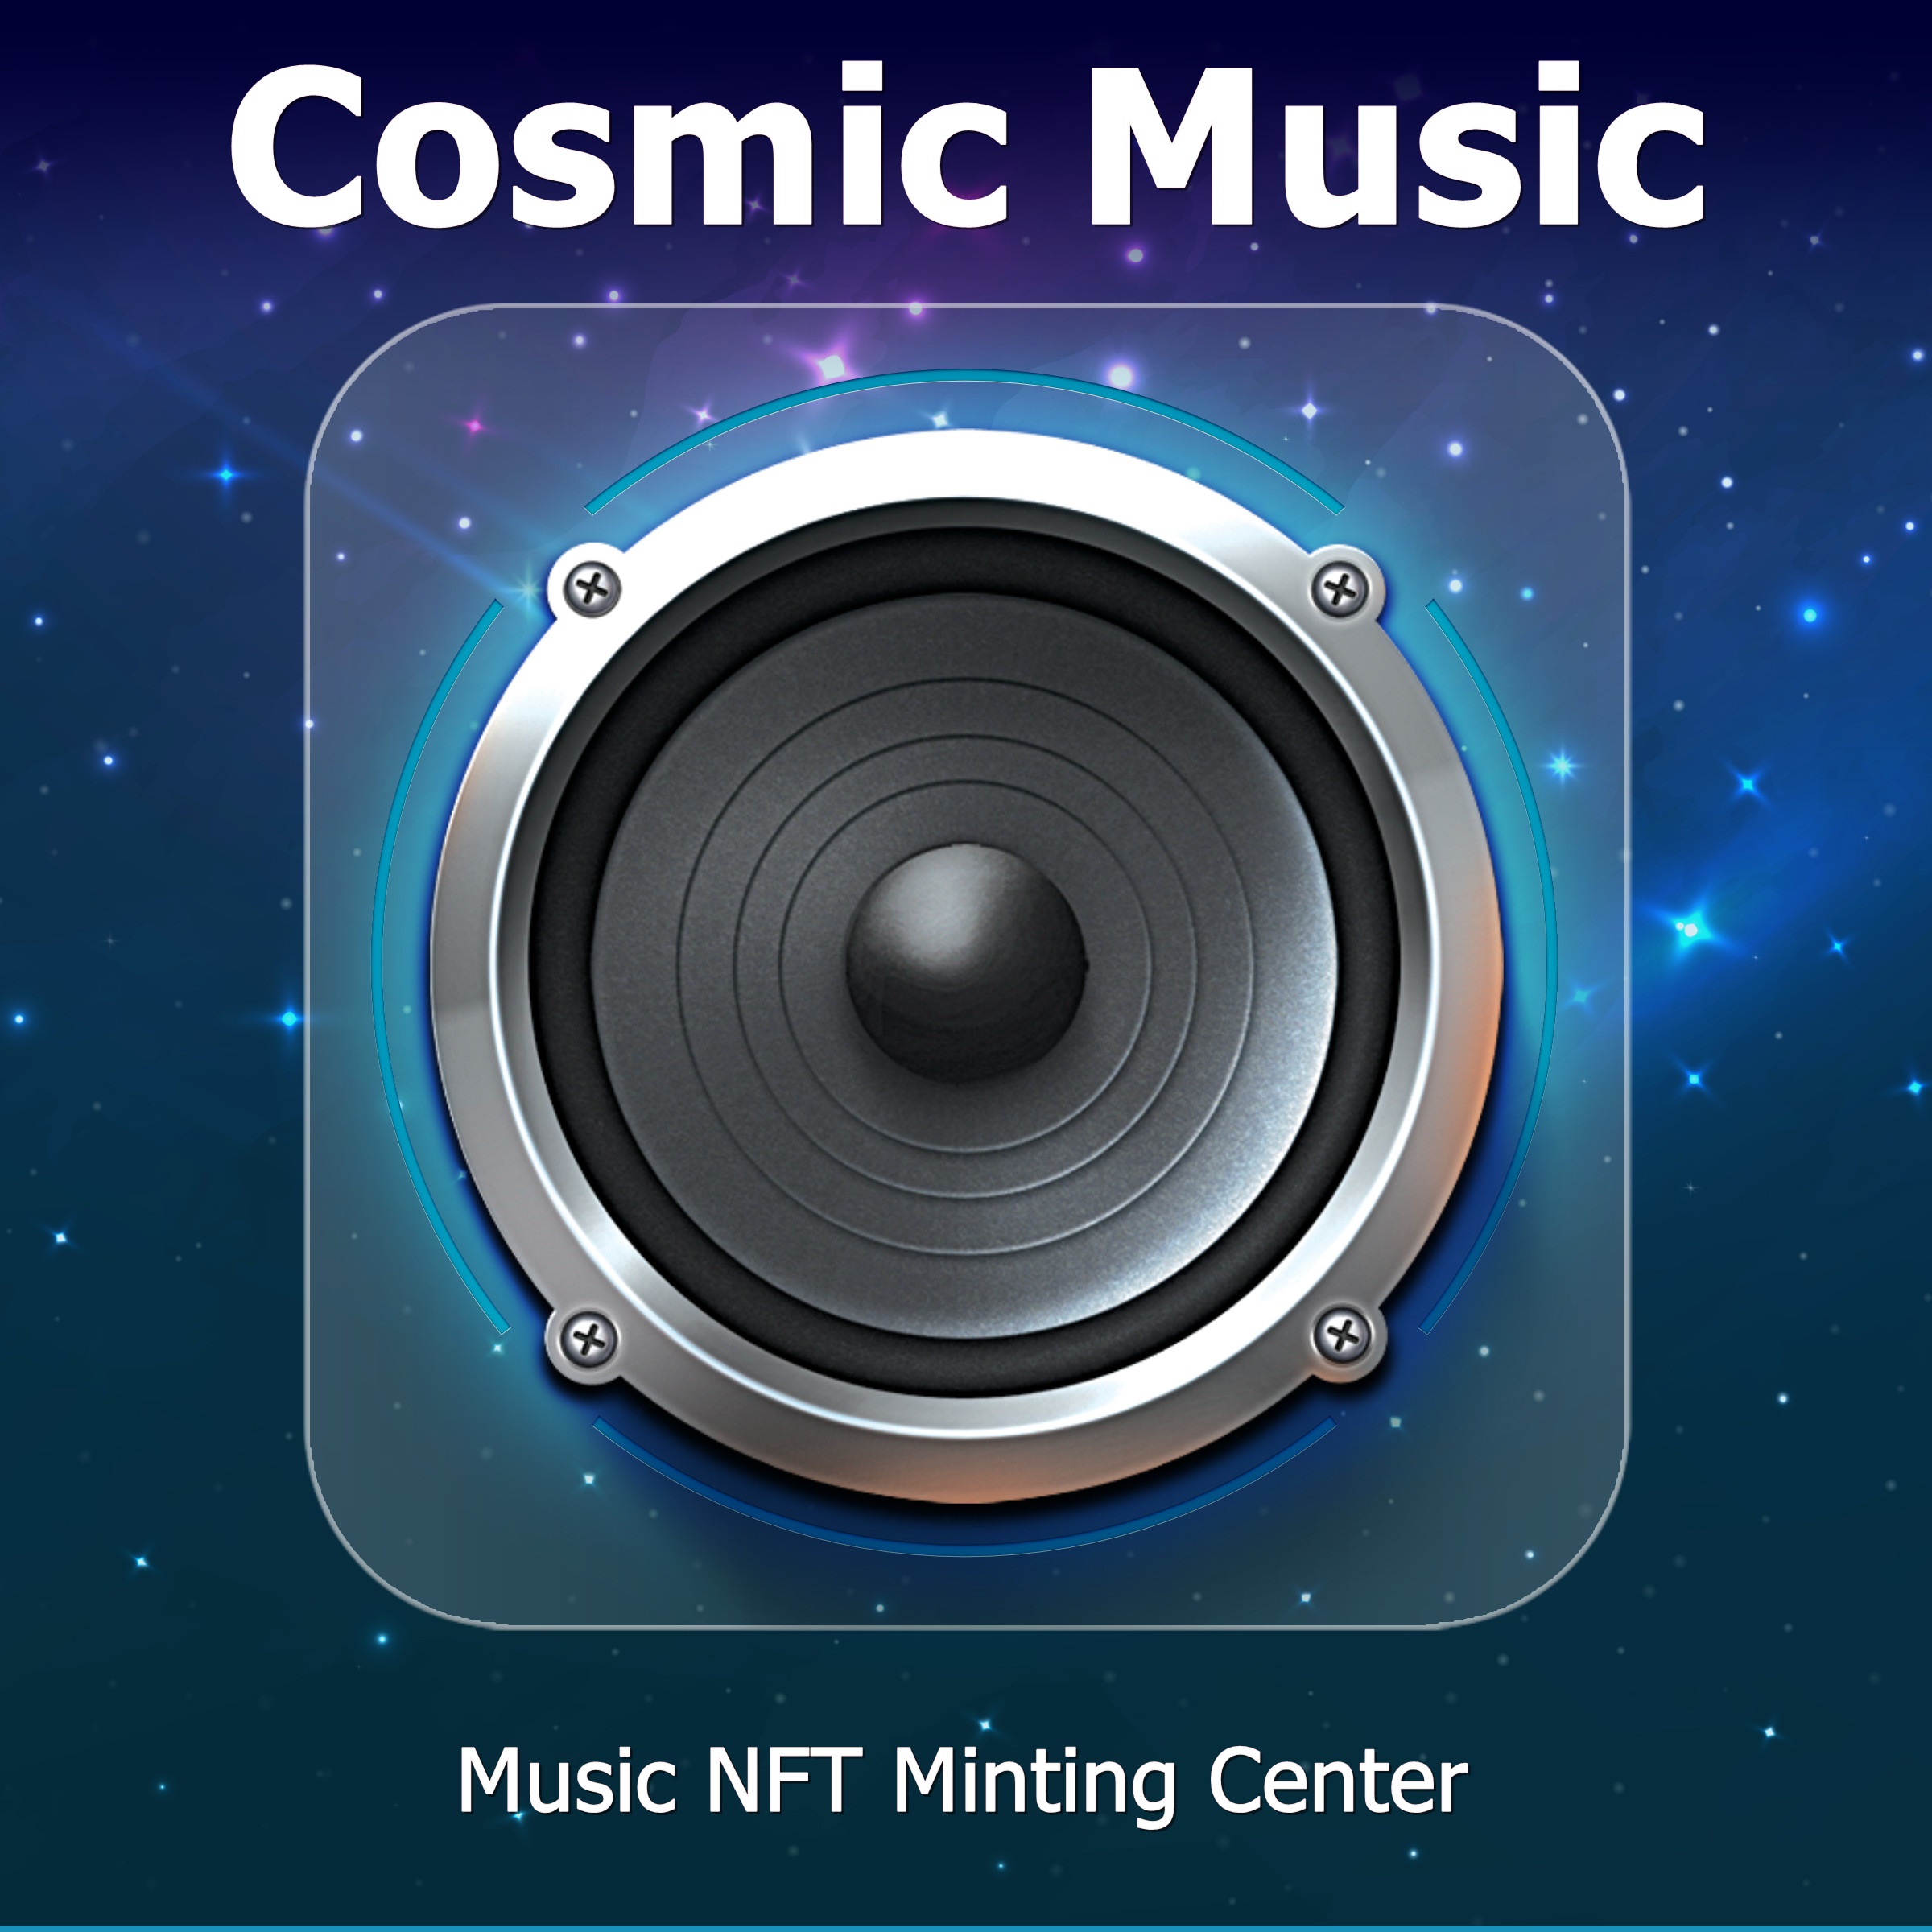 Cosmic music